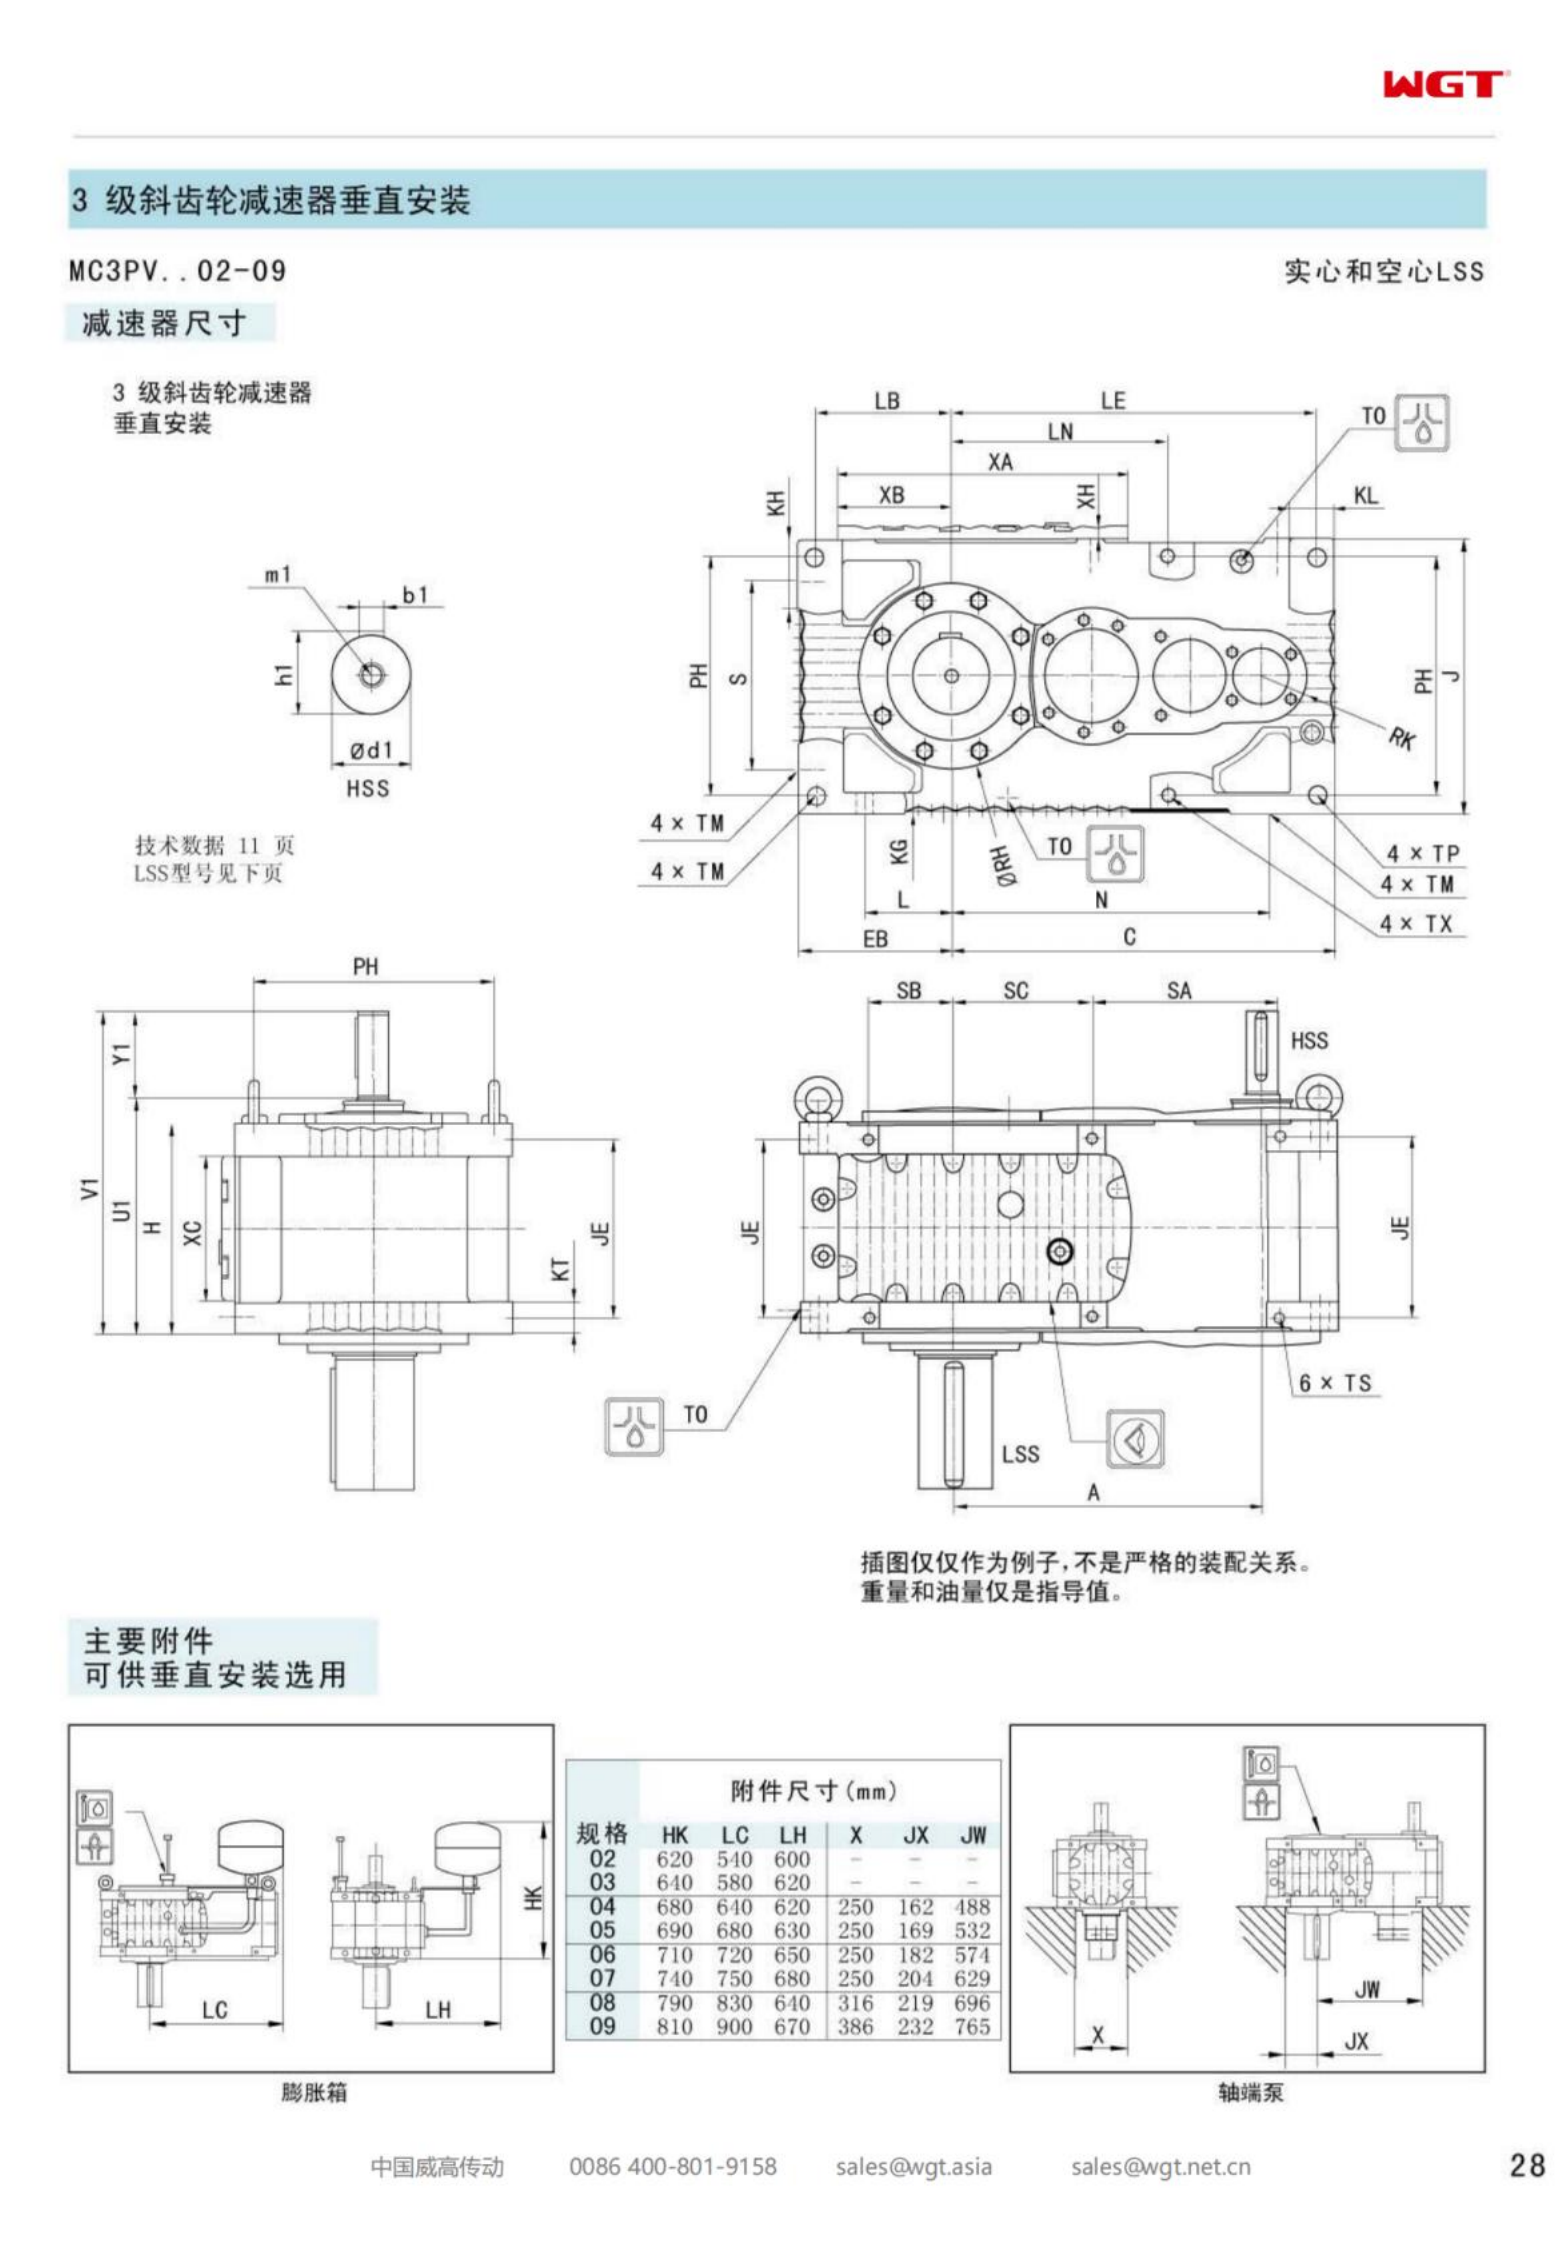 MC3PVSF03 replaces _SEW_MC_Series gearbox (patent)